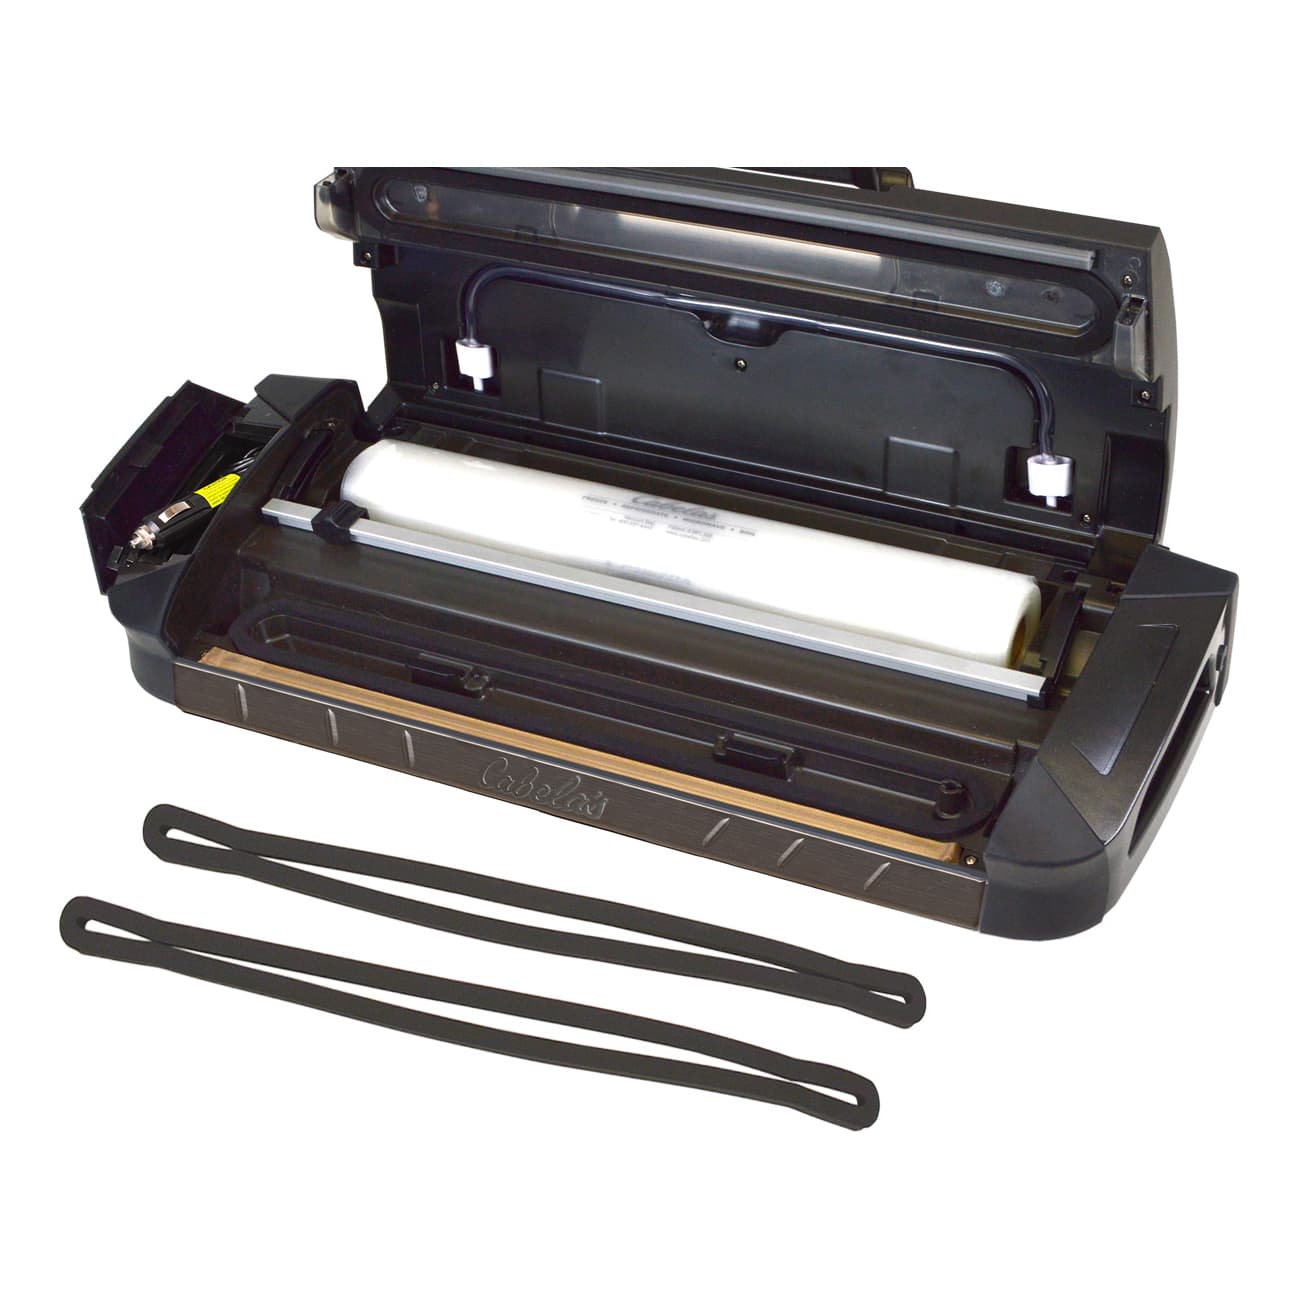 Cabela's 15” Pro Series Vacuum Sealer Maintenance Kit - Maintenance Kit with Vacuum Sealer